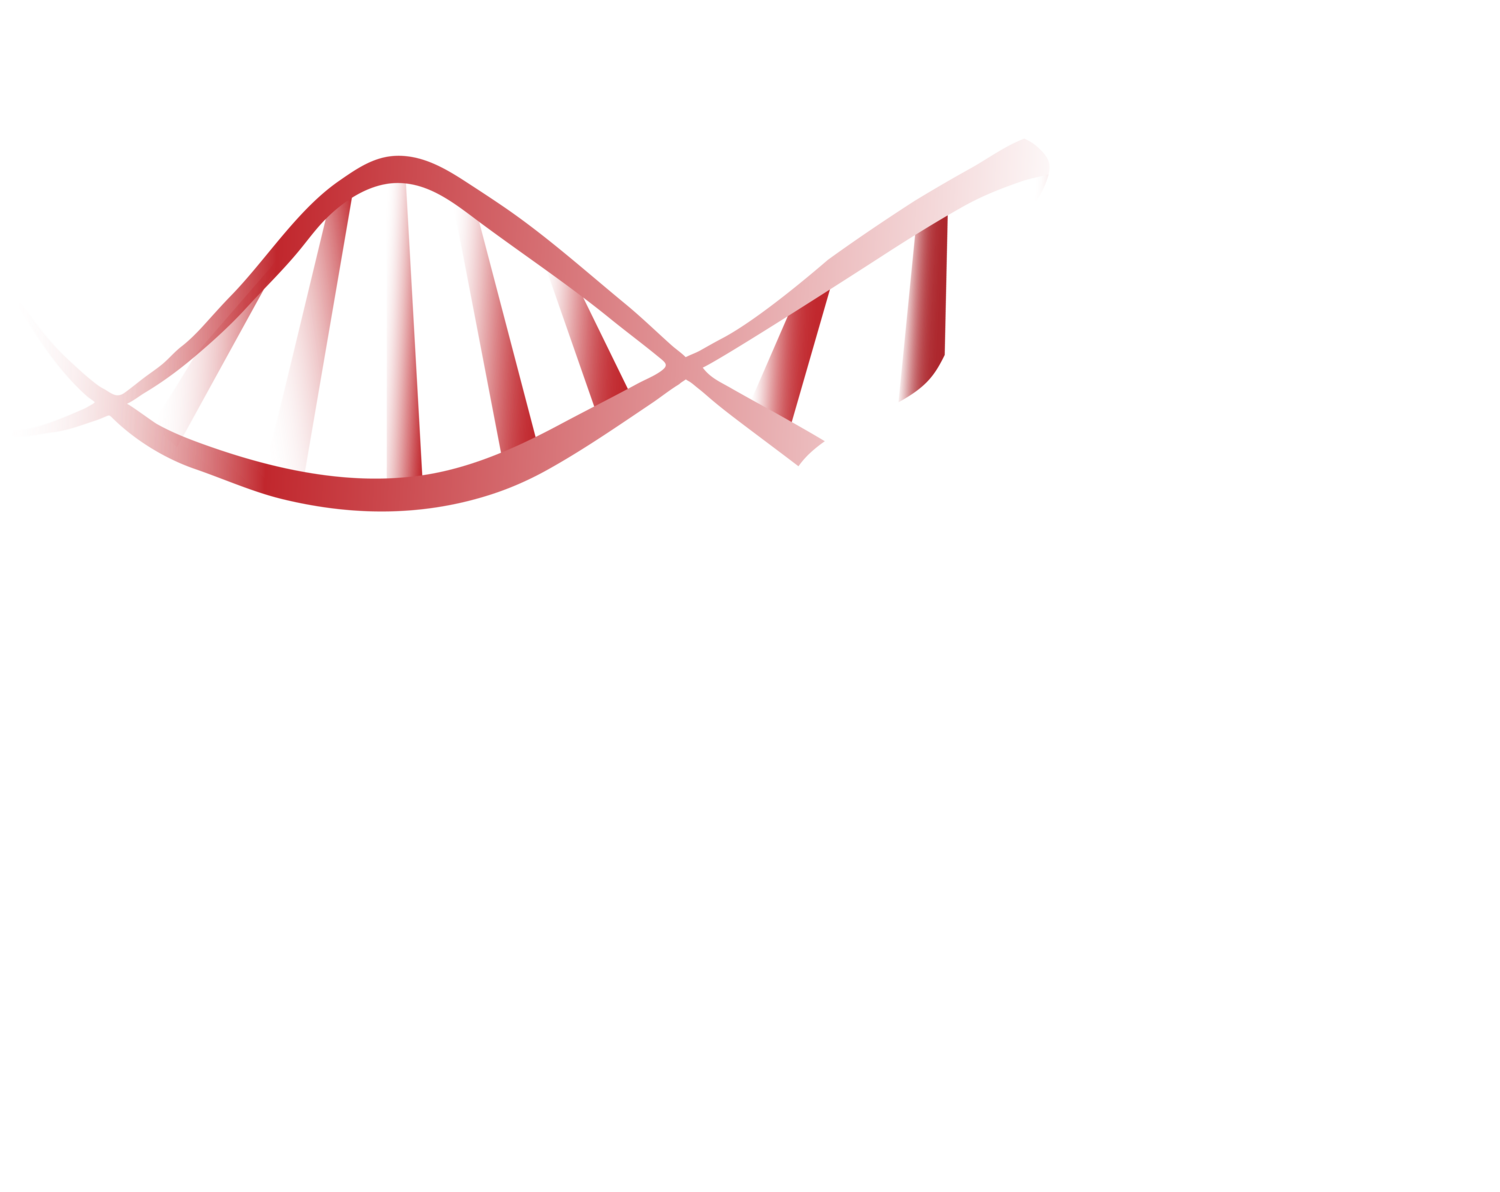 THE PLATFORM